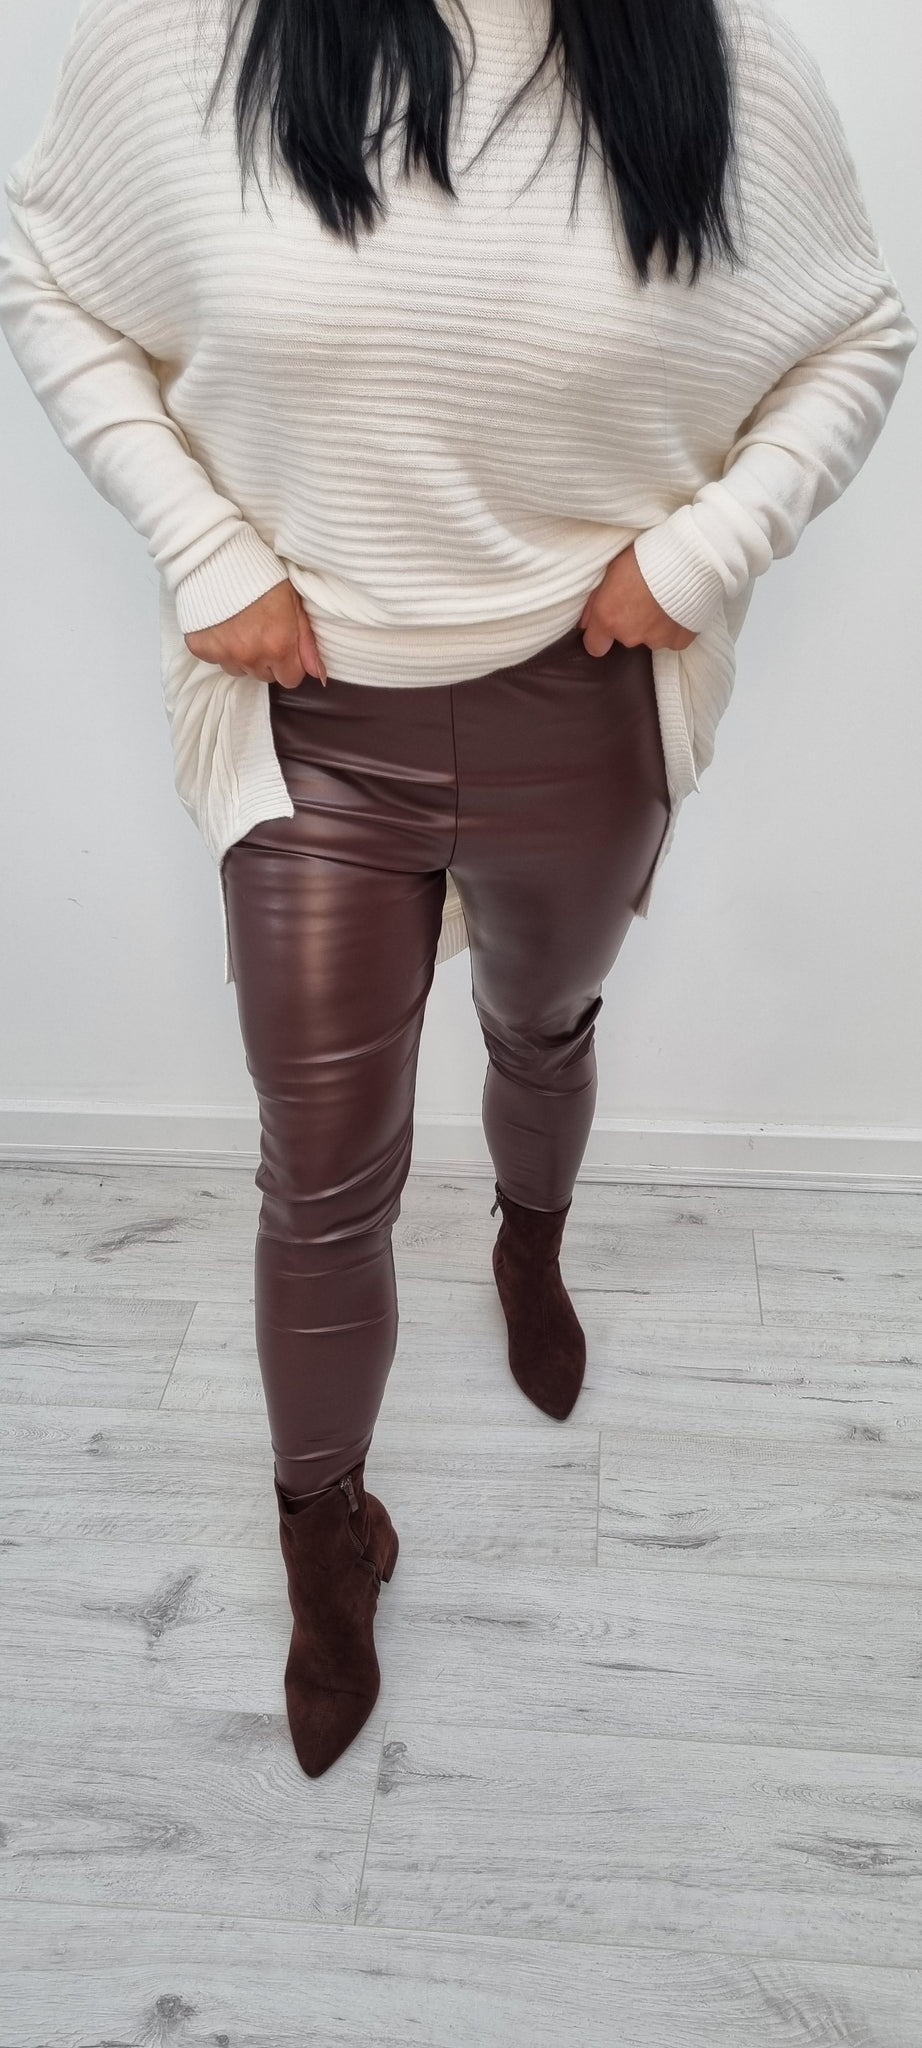 Arizona Leather Look Leggings - Wet Look - Chocolate